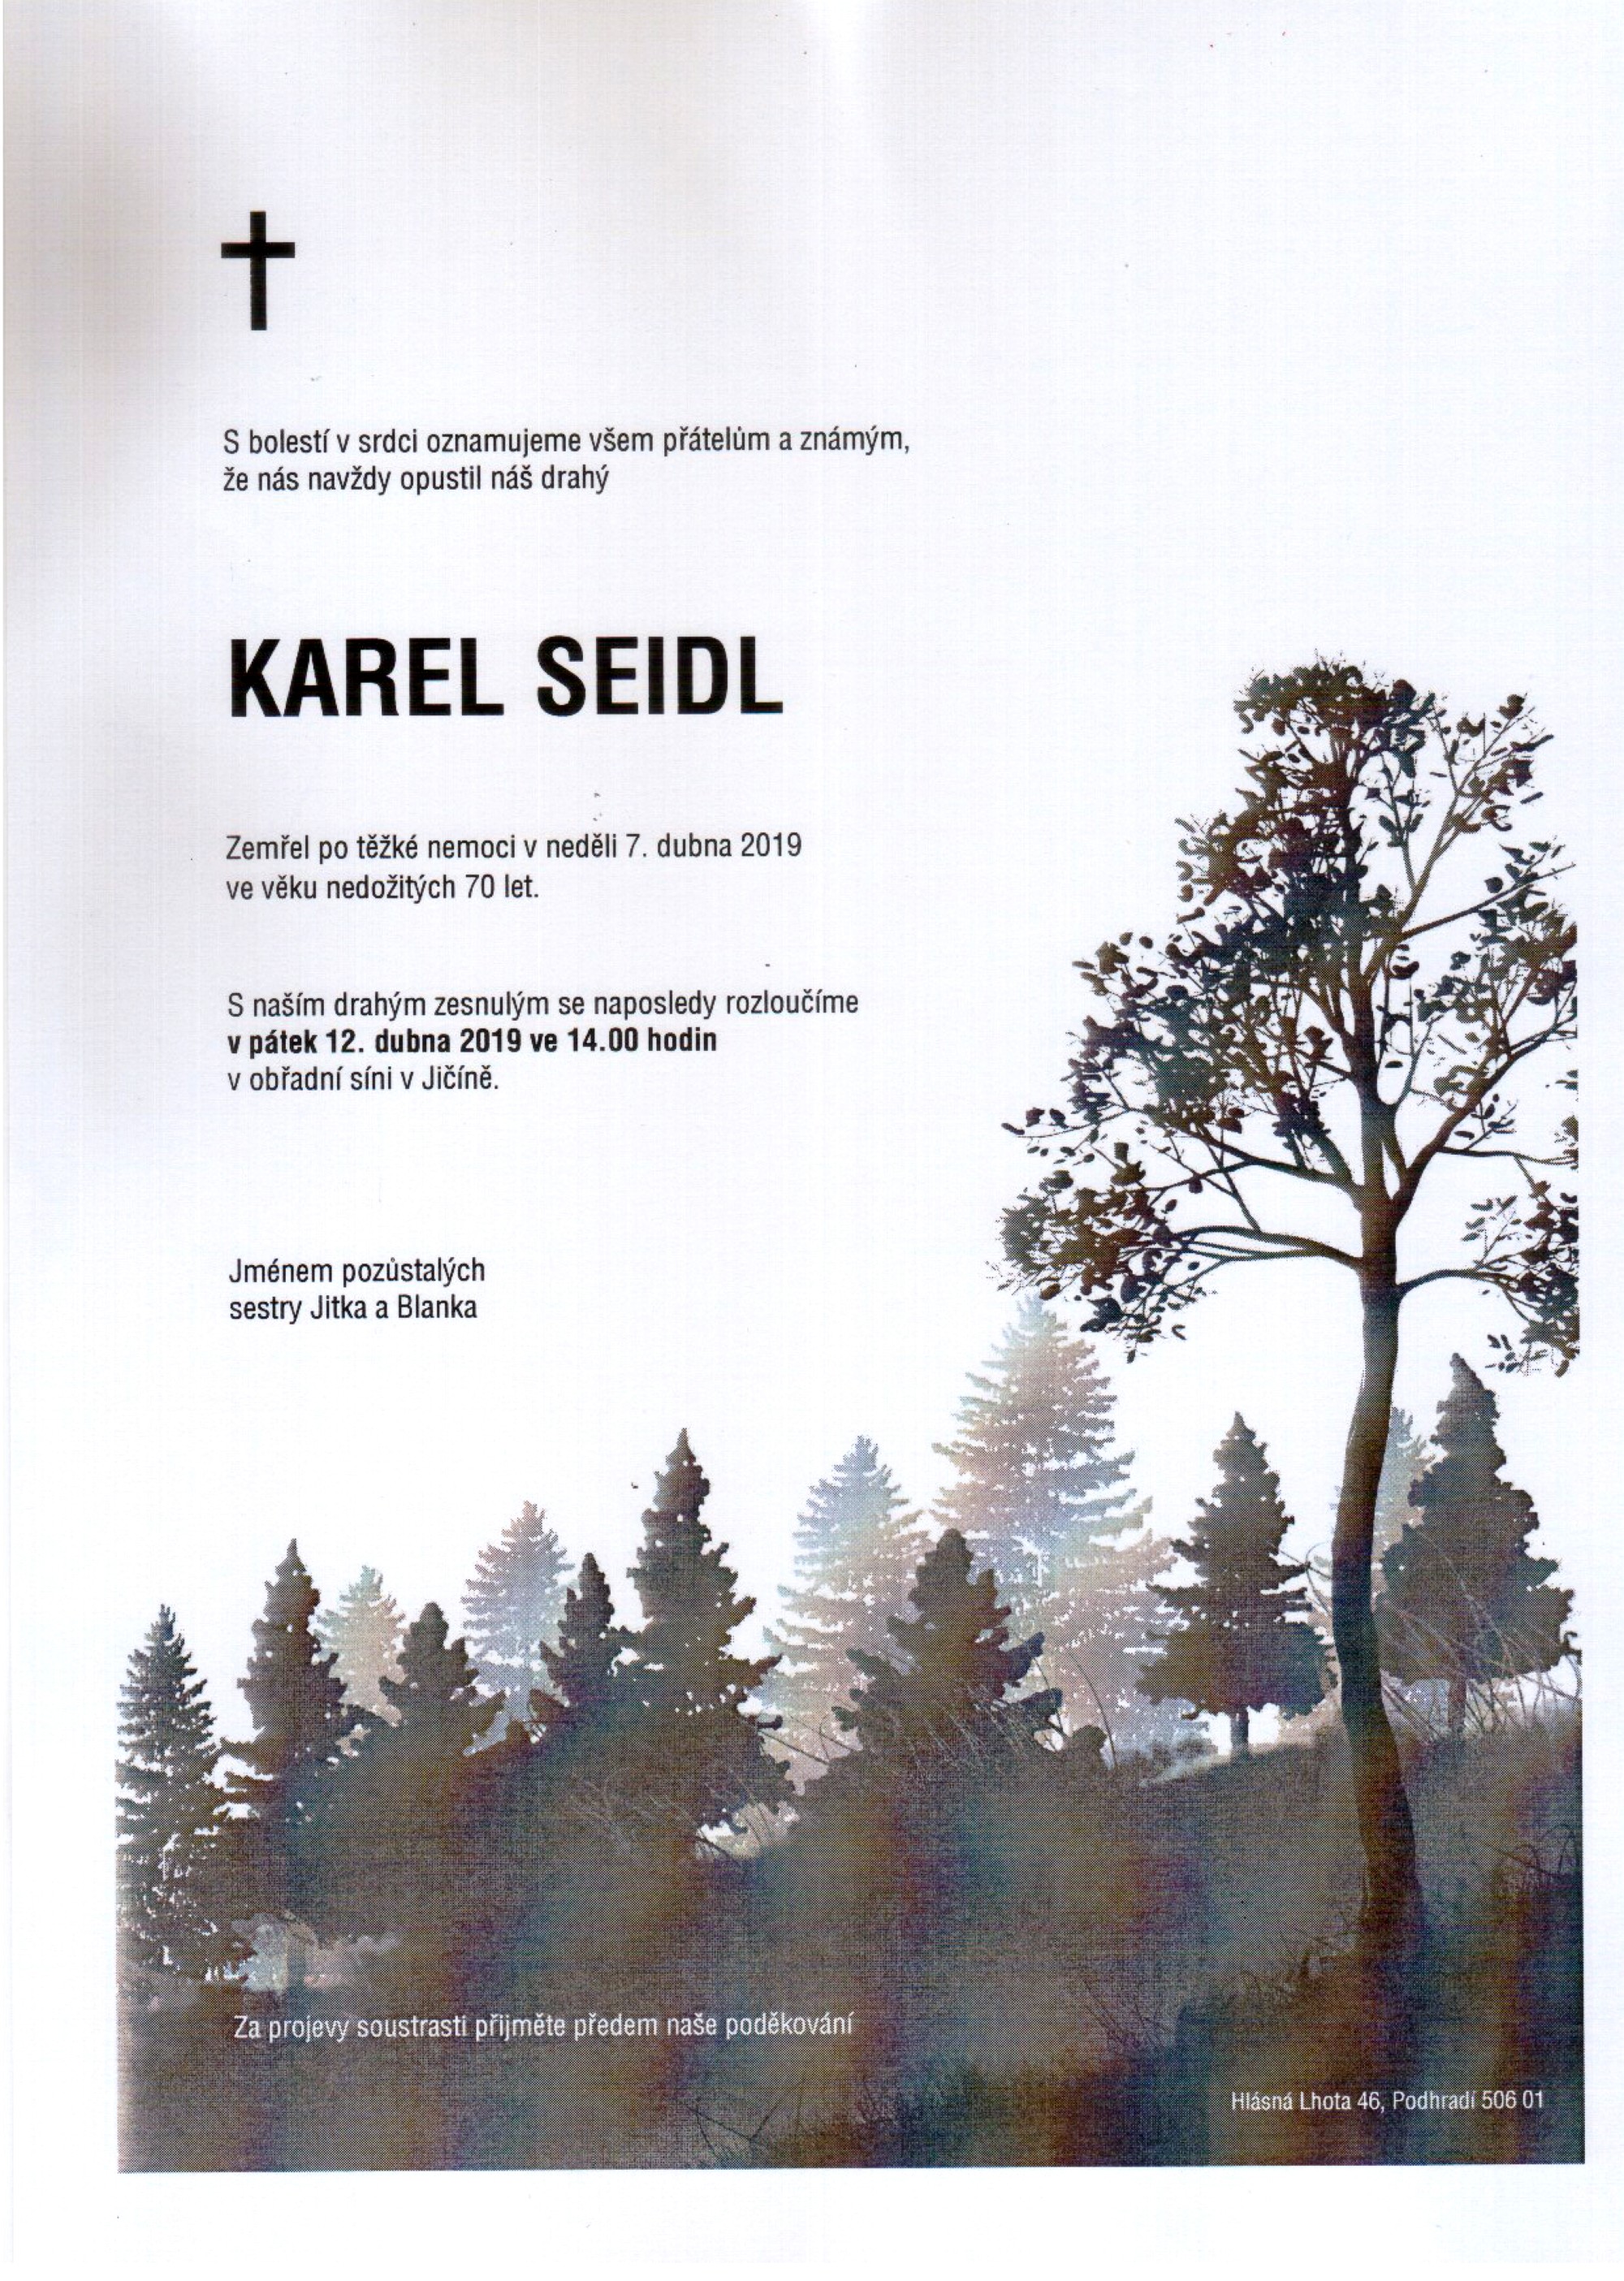 Karel Seidl